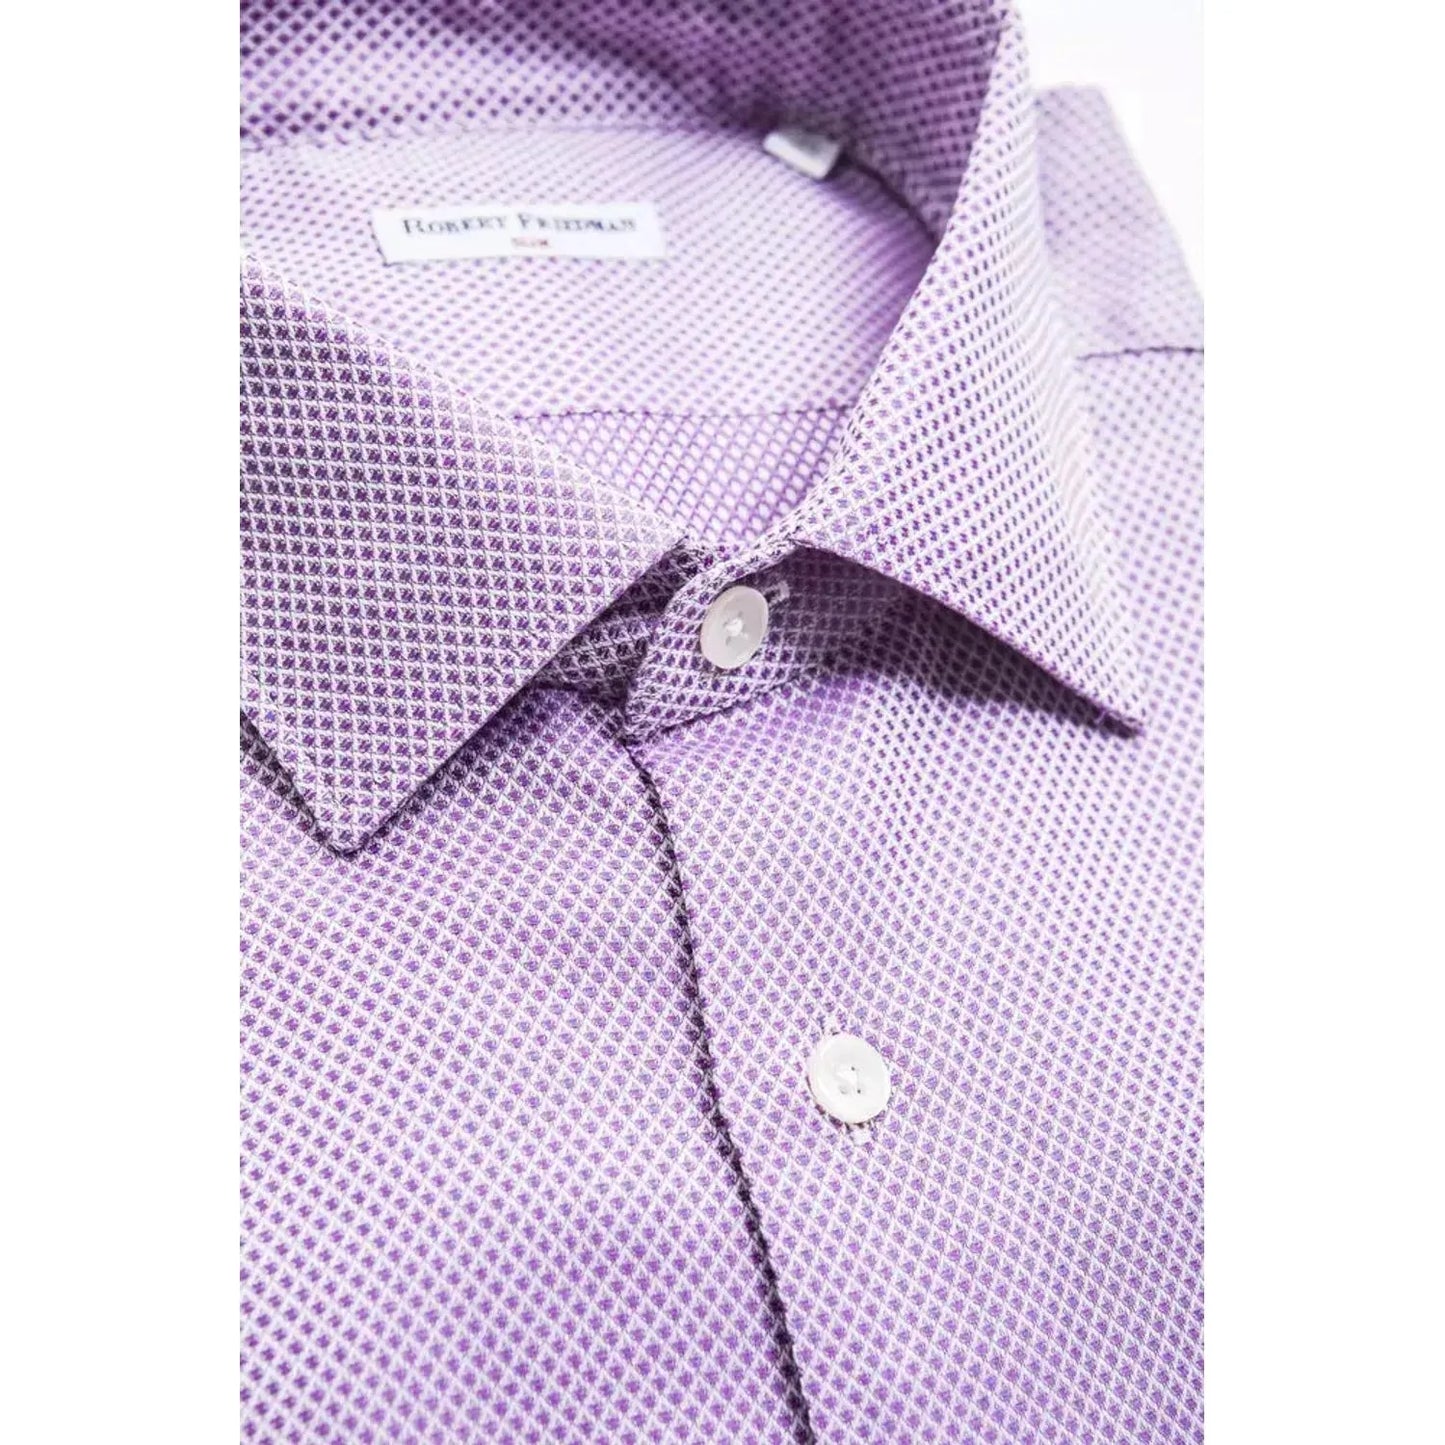 Robert Friedman Elegant Slim Collar Cotton Shirt pink-cotton-shirt-5